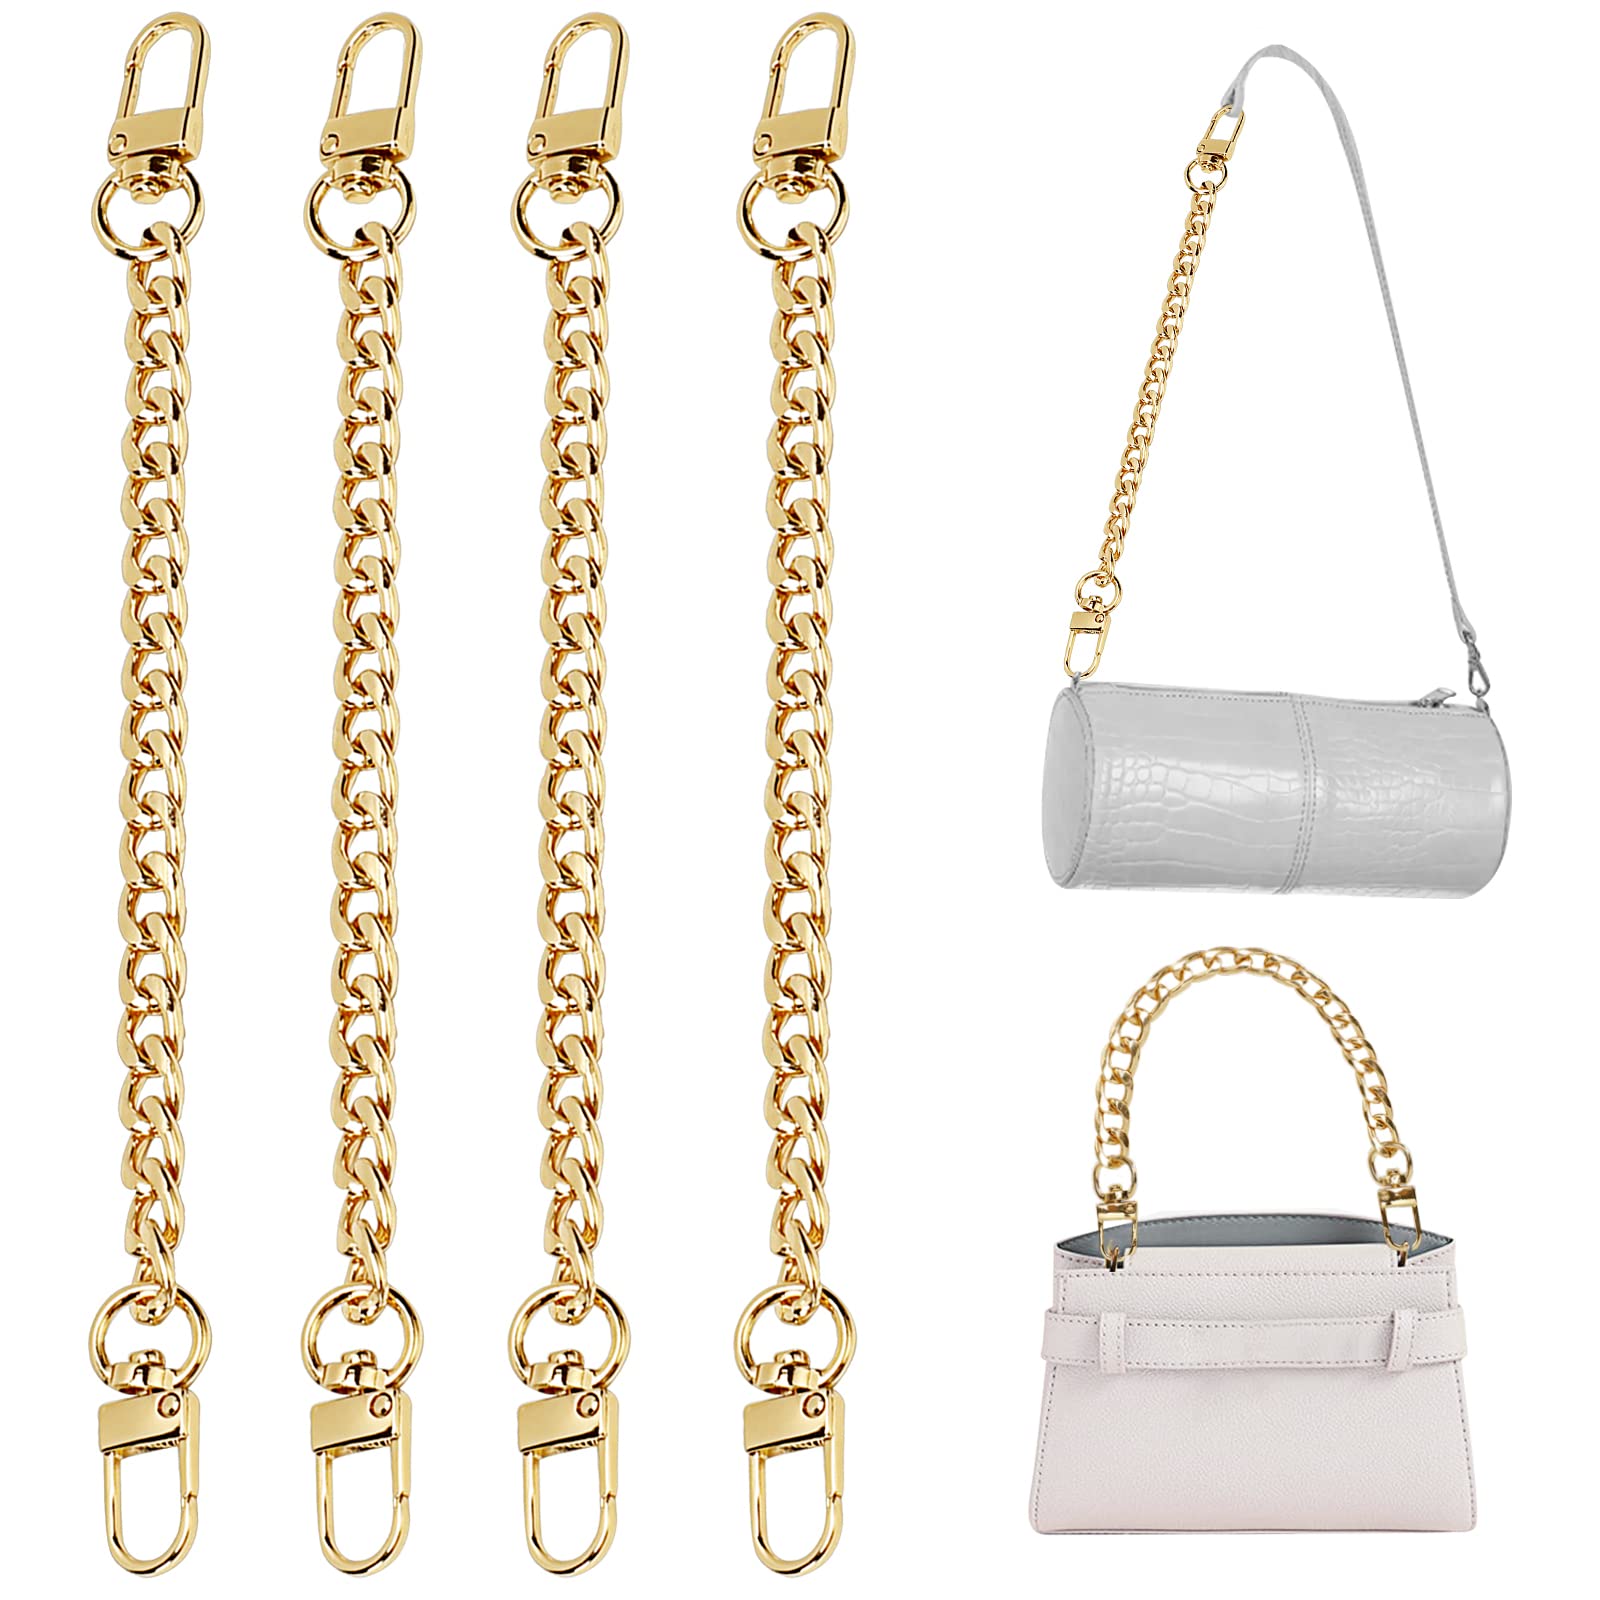 Adjustable Metal Buckles Chain Strap Bag Shoulder Crossbody Bags Accessories  | eBay